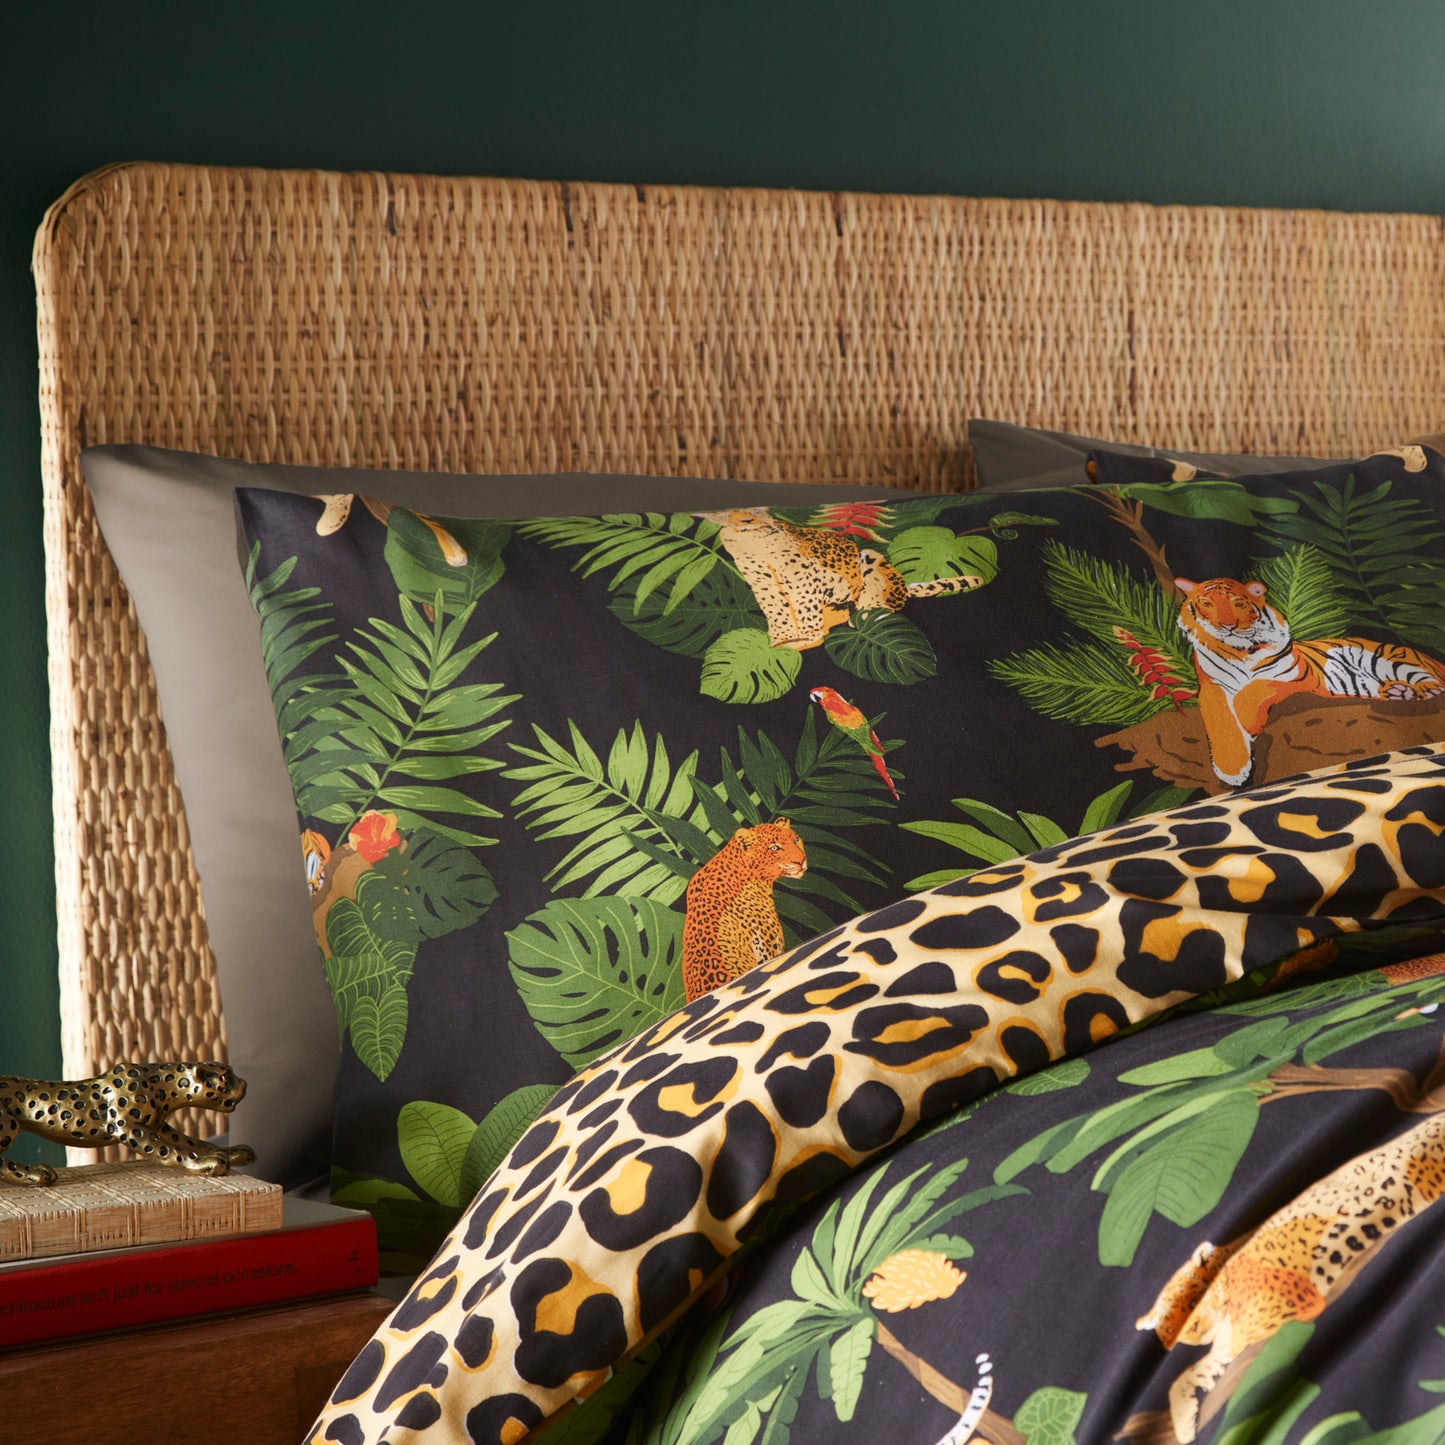 Jungle Cats Multi Duvet Cover Set by Portfolio Home